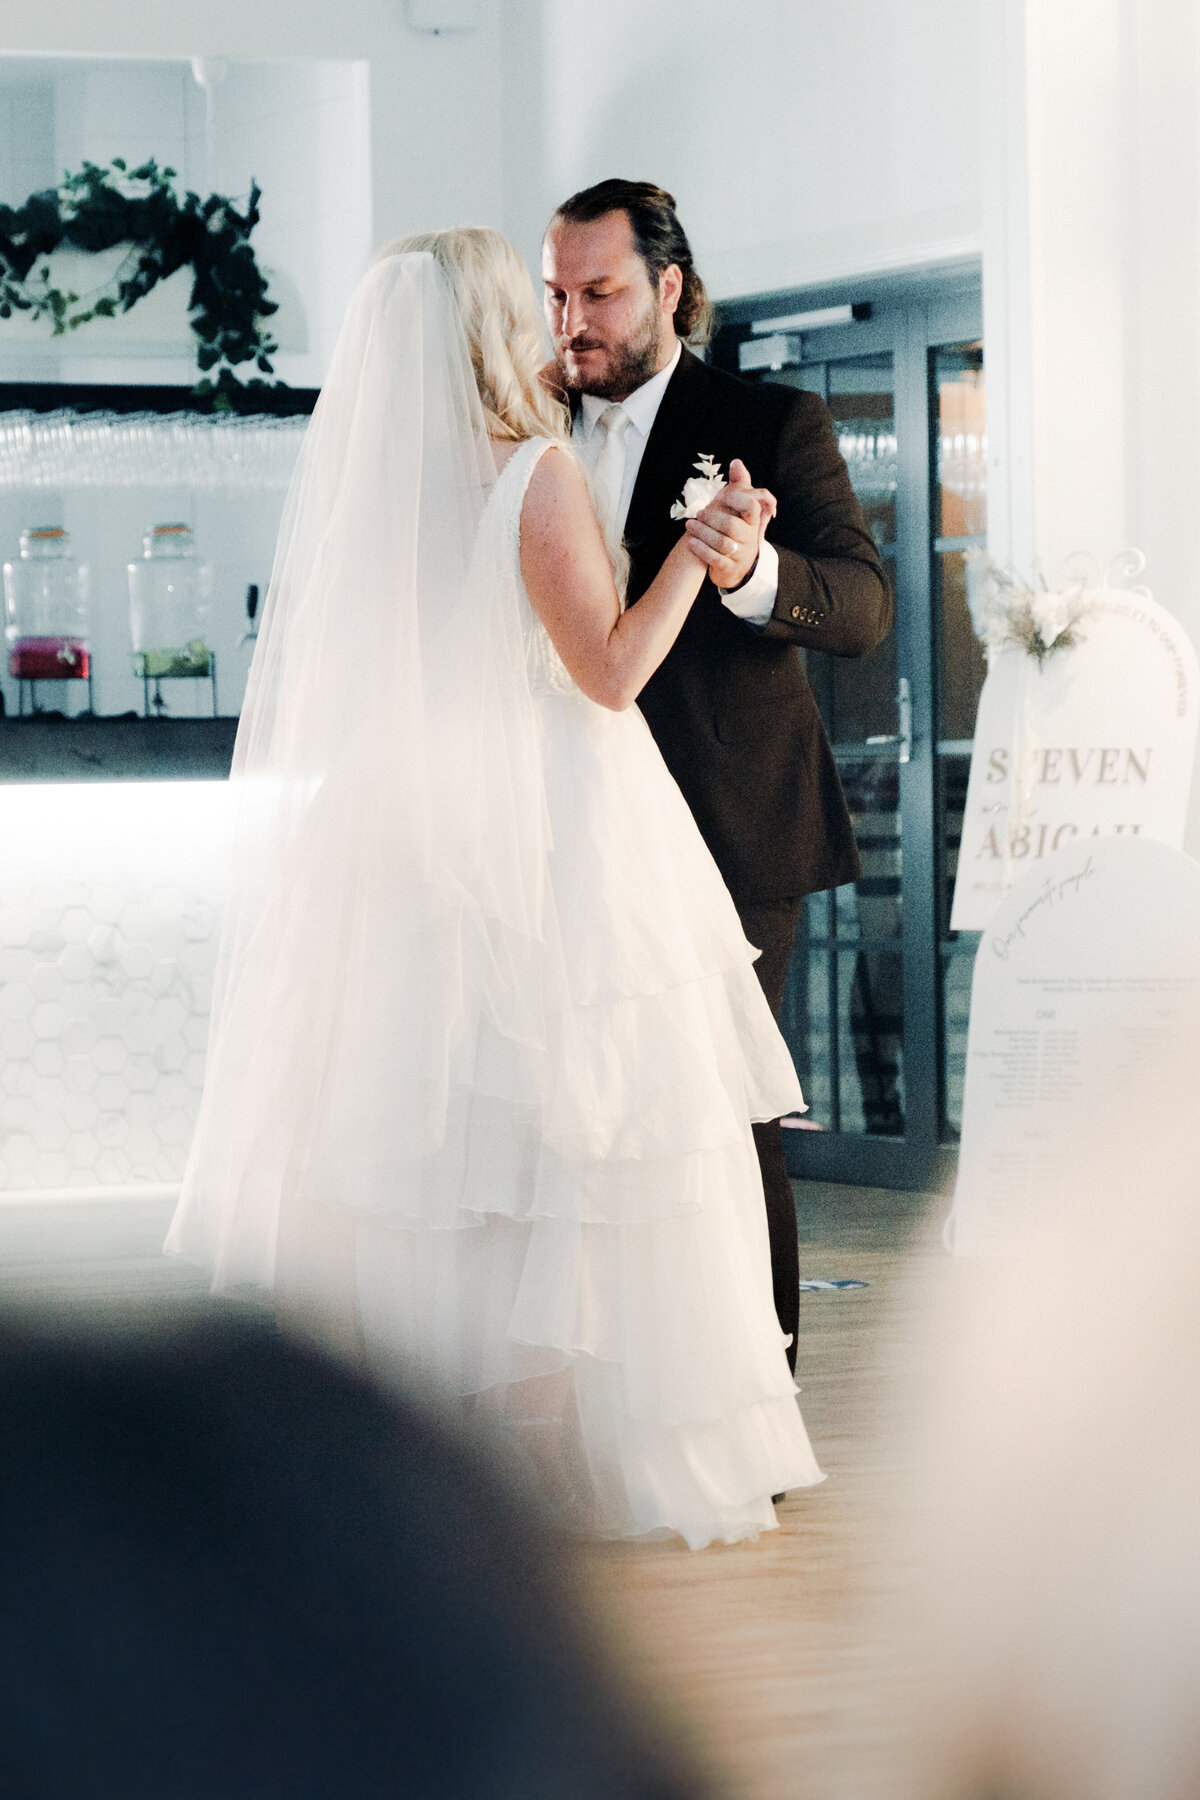 Abigail_Steven_Wedding_Images_Roam Ahead Weddings - 887